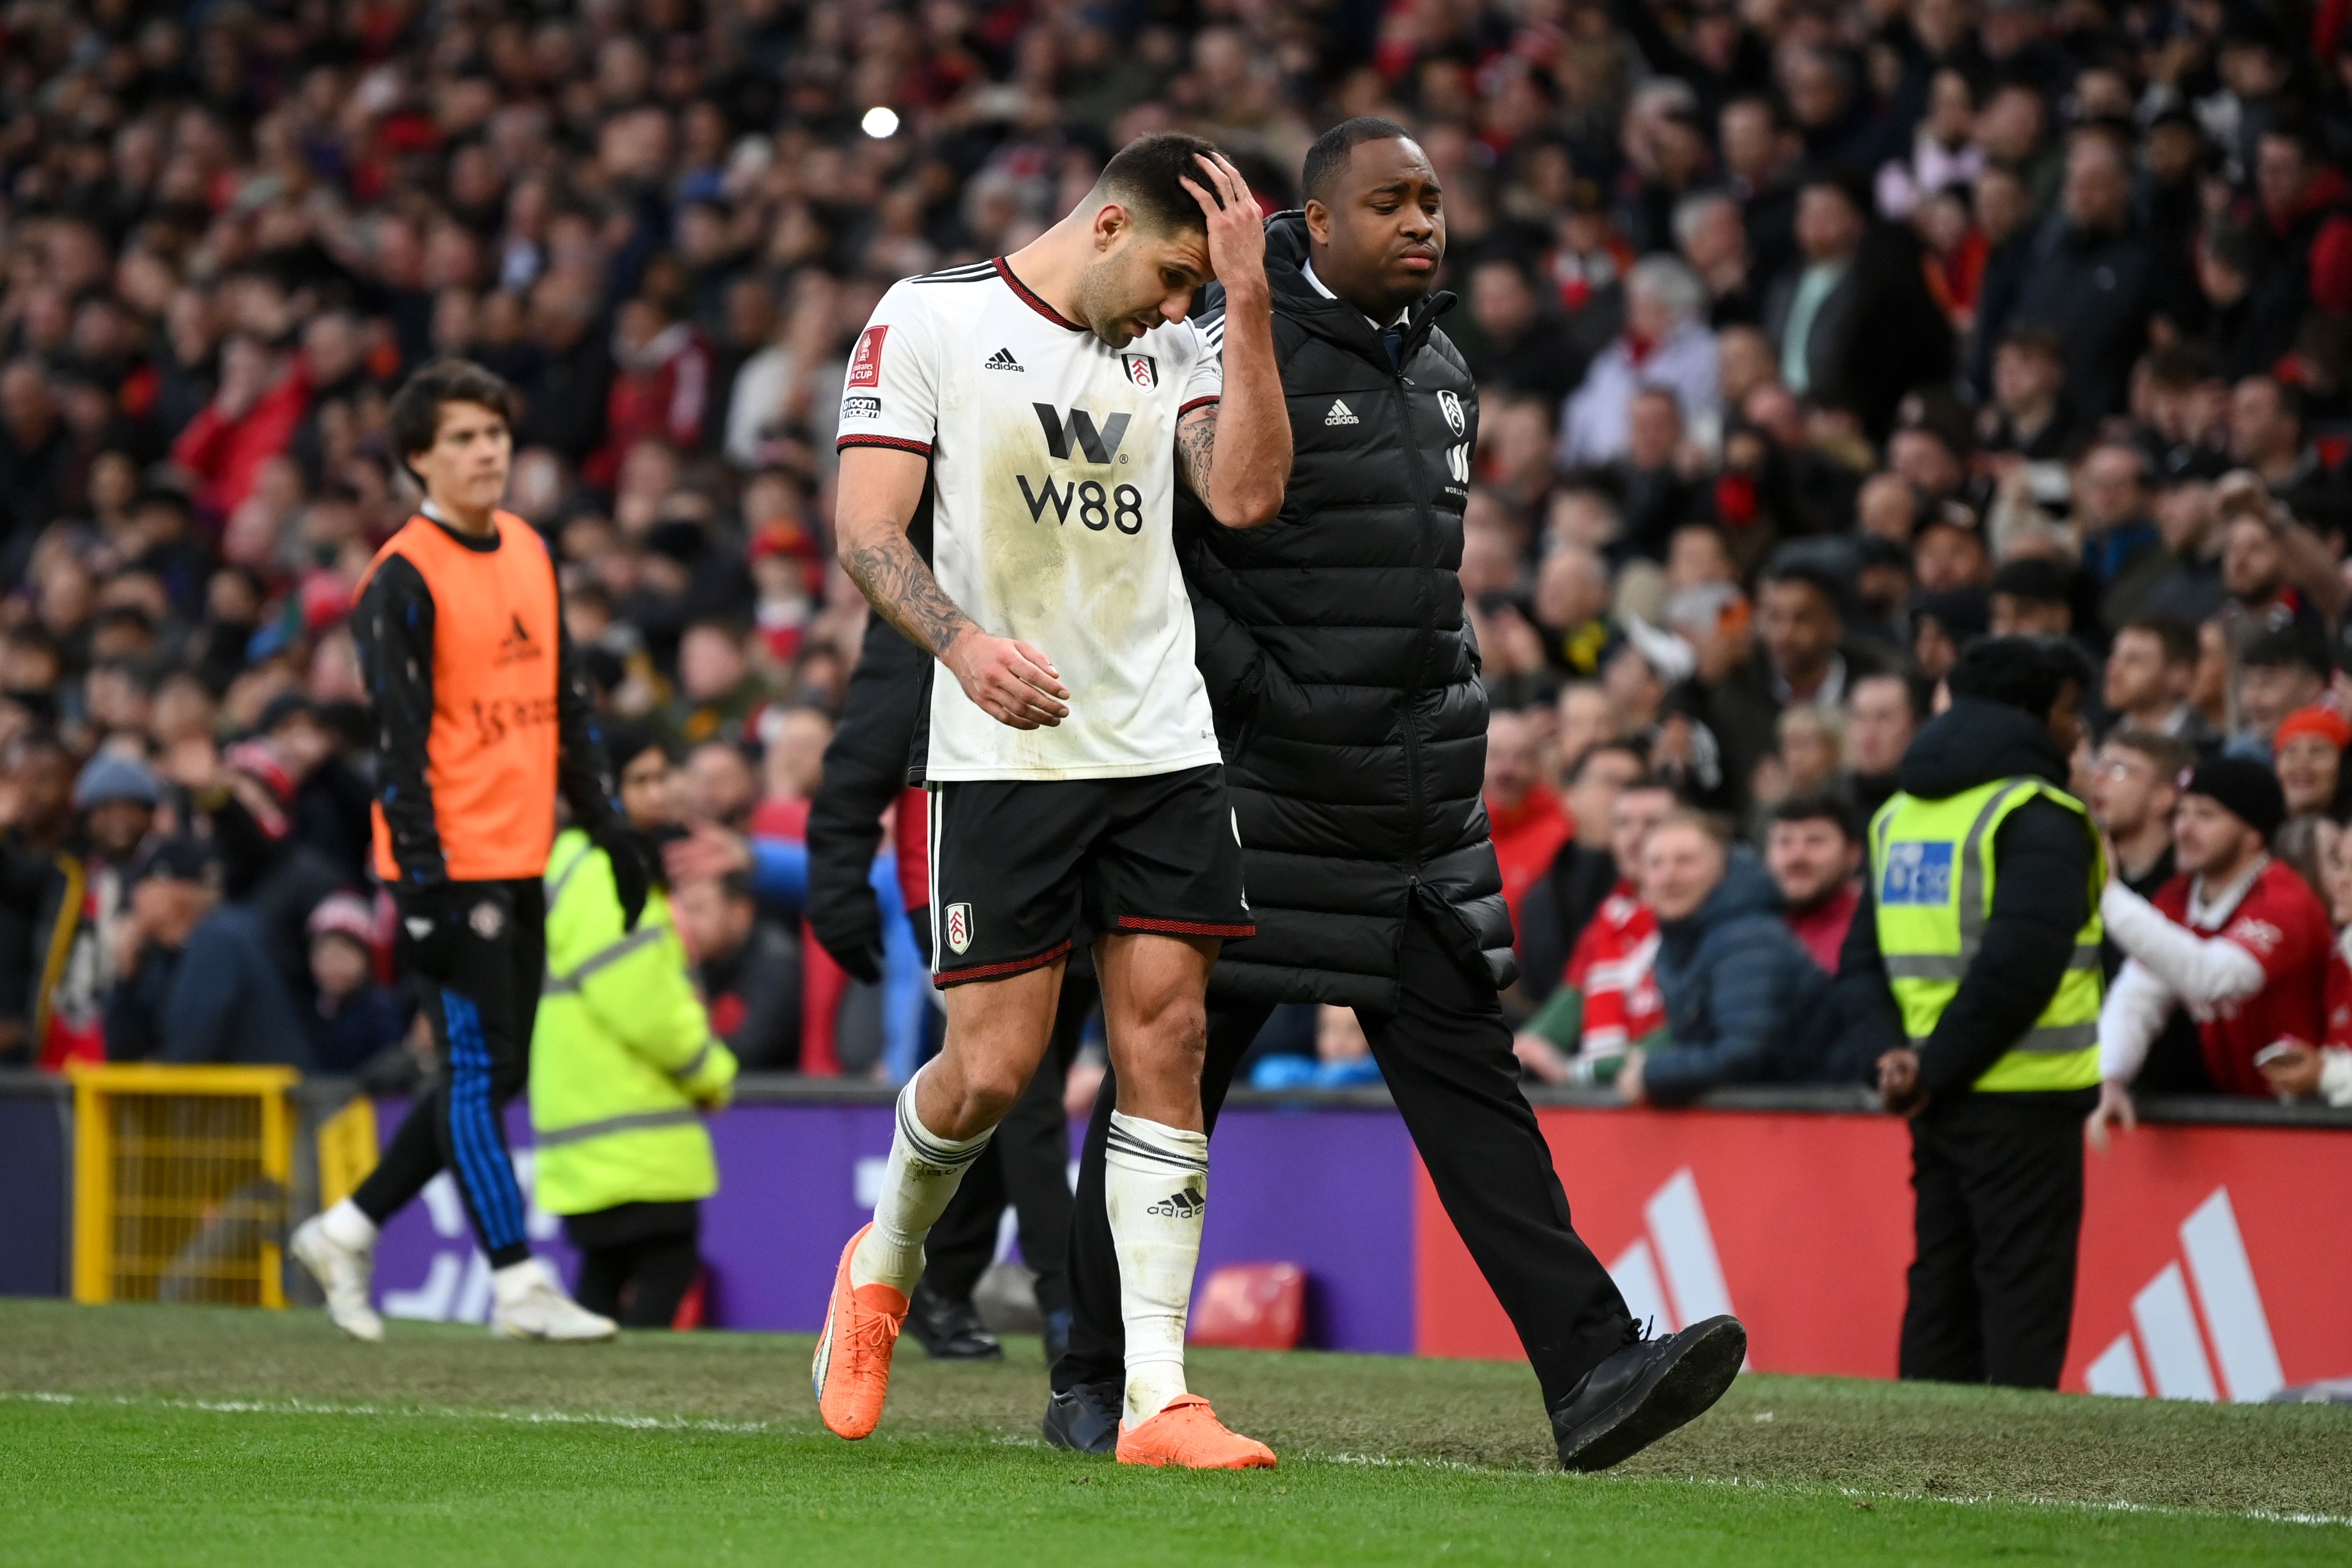 Aleksandar Mitrovic of Fulham leaves the pitch vs Manchester United.